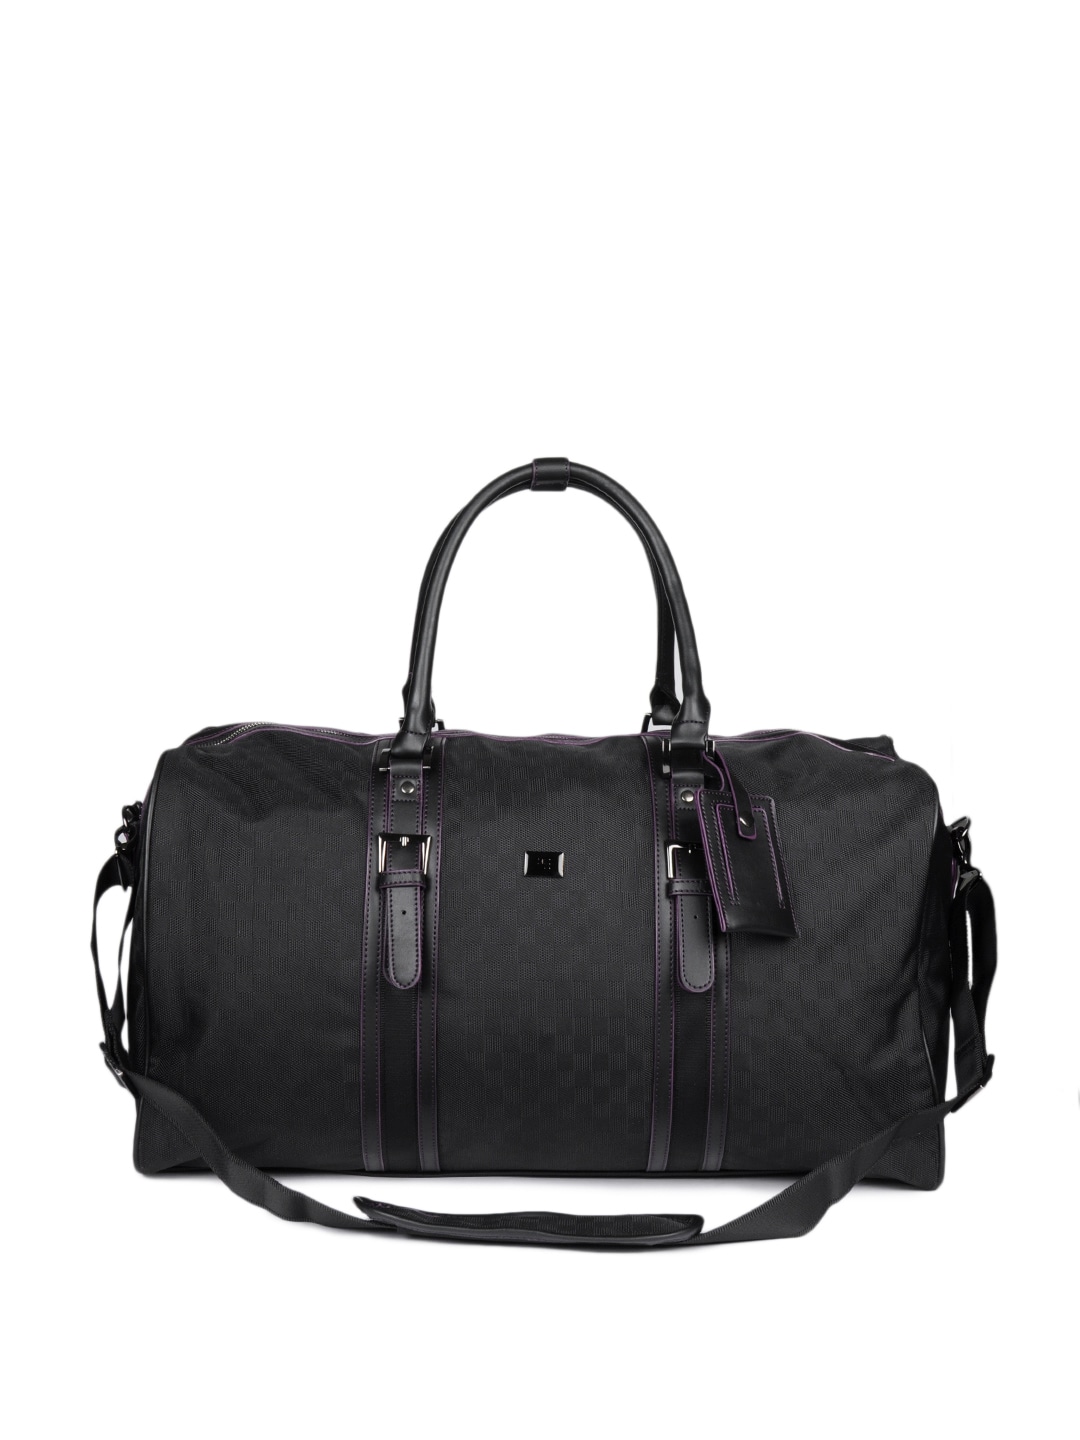 Peter England Unisex Black Duffle Bag